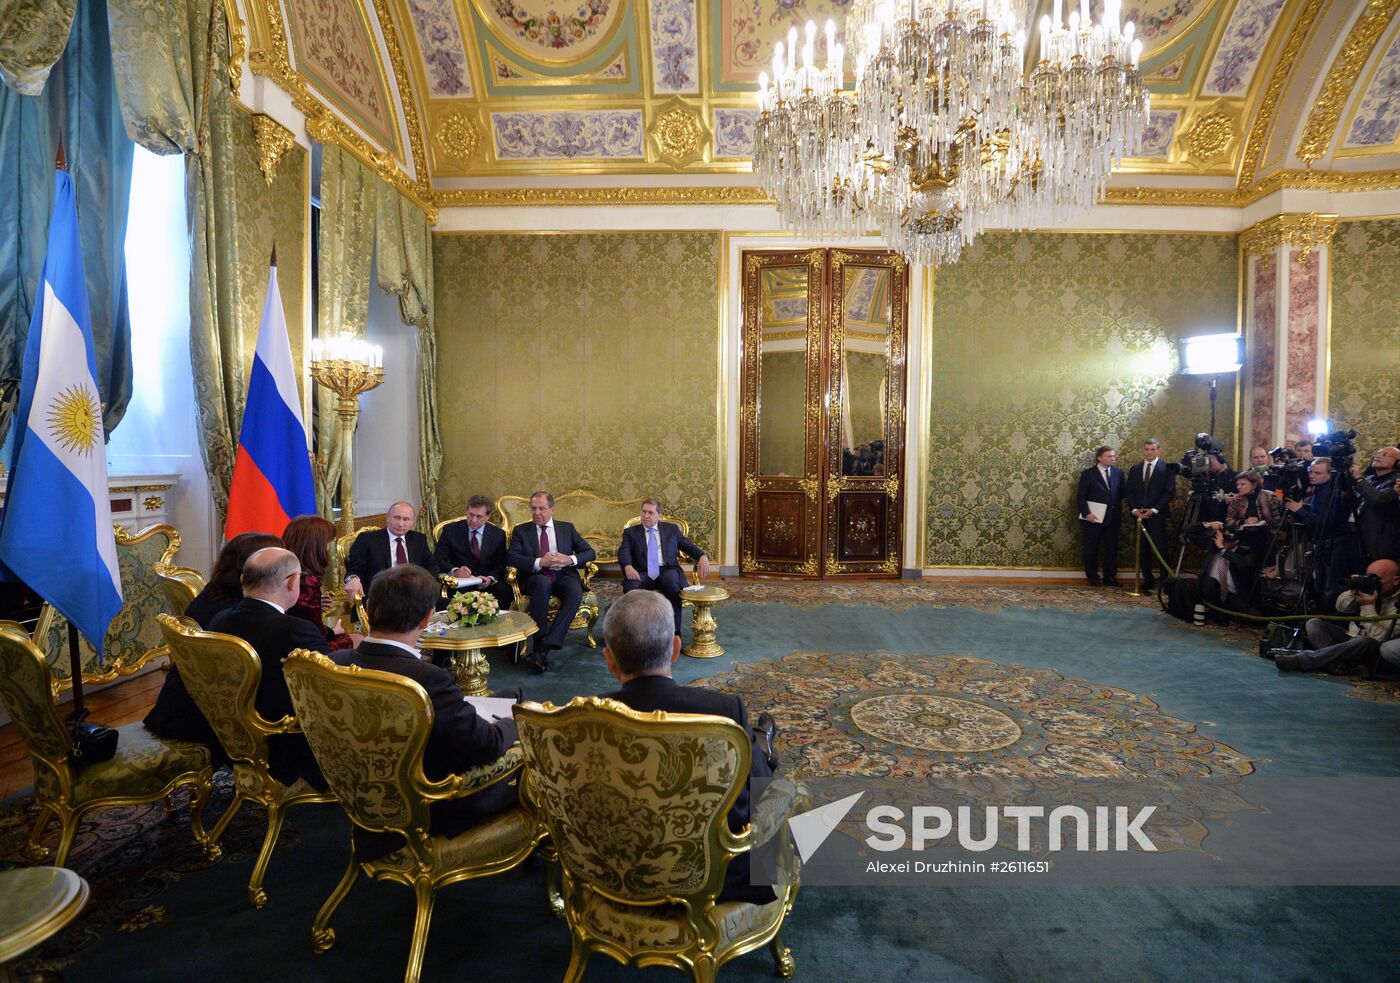 Russian President Vladimir Putin's meeting with President of Argentina Cristina Fernández de Kirchner